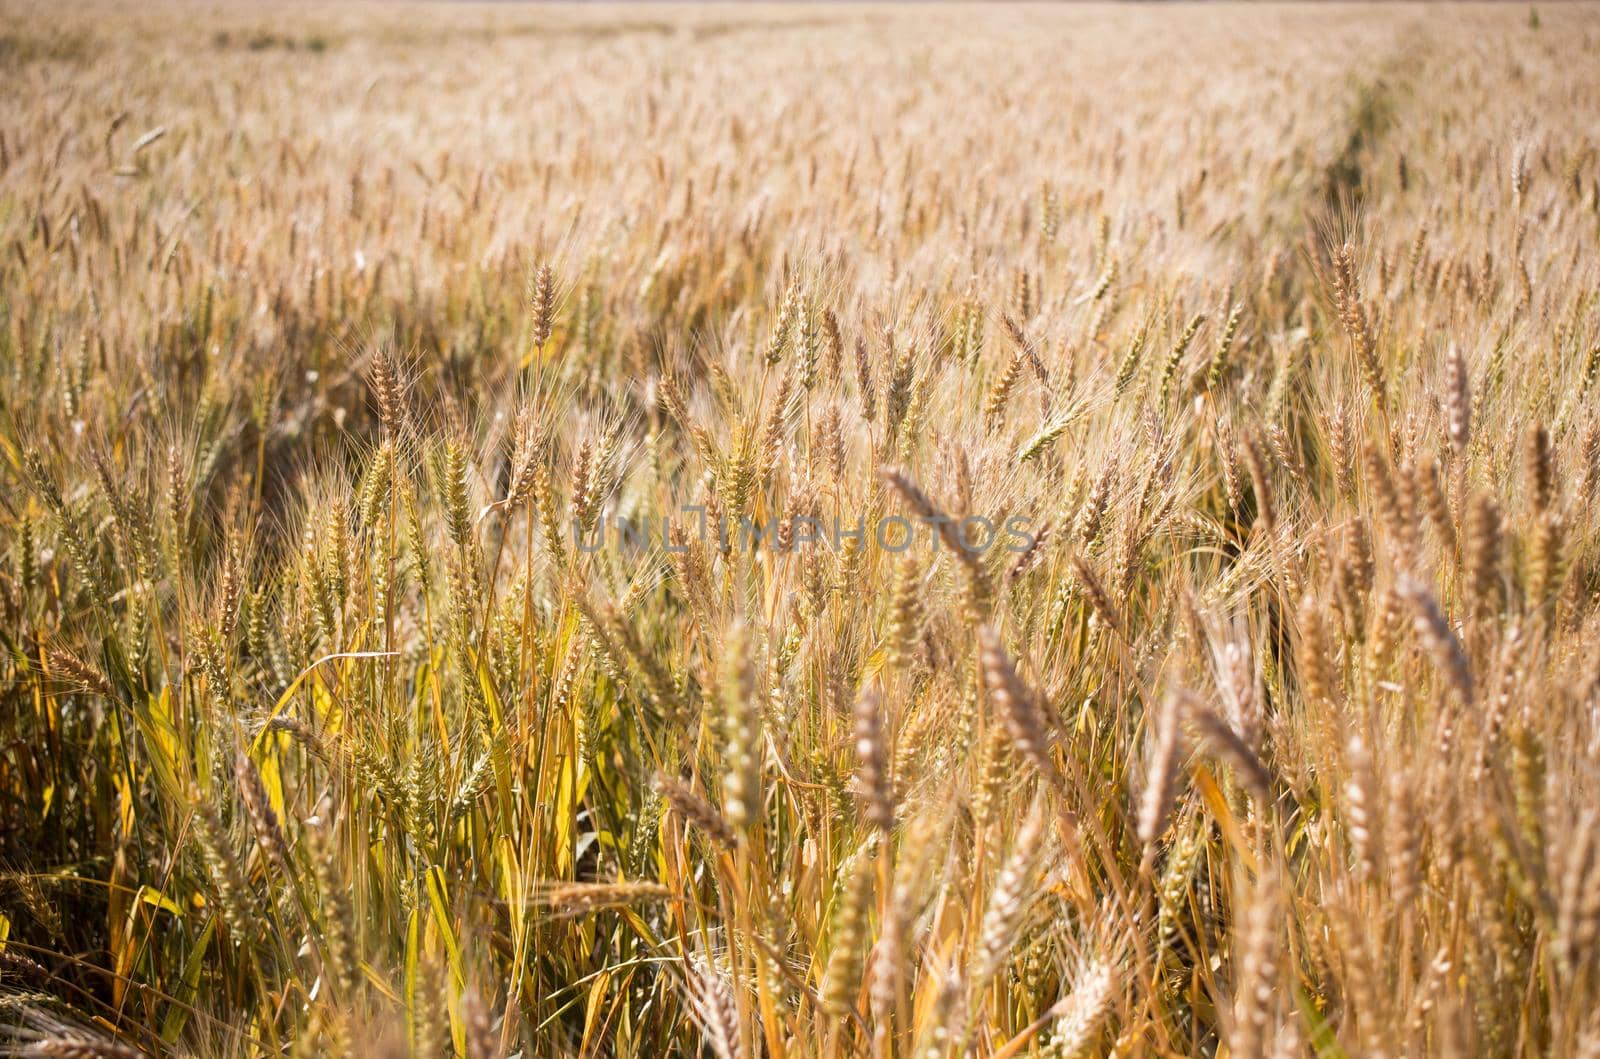 A wheat field, fresh crop of wheat.